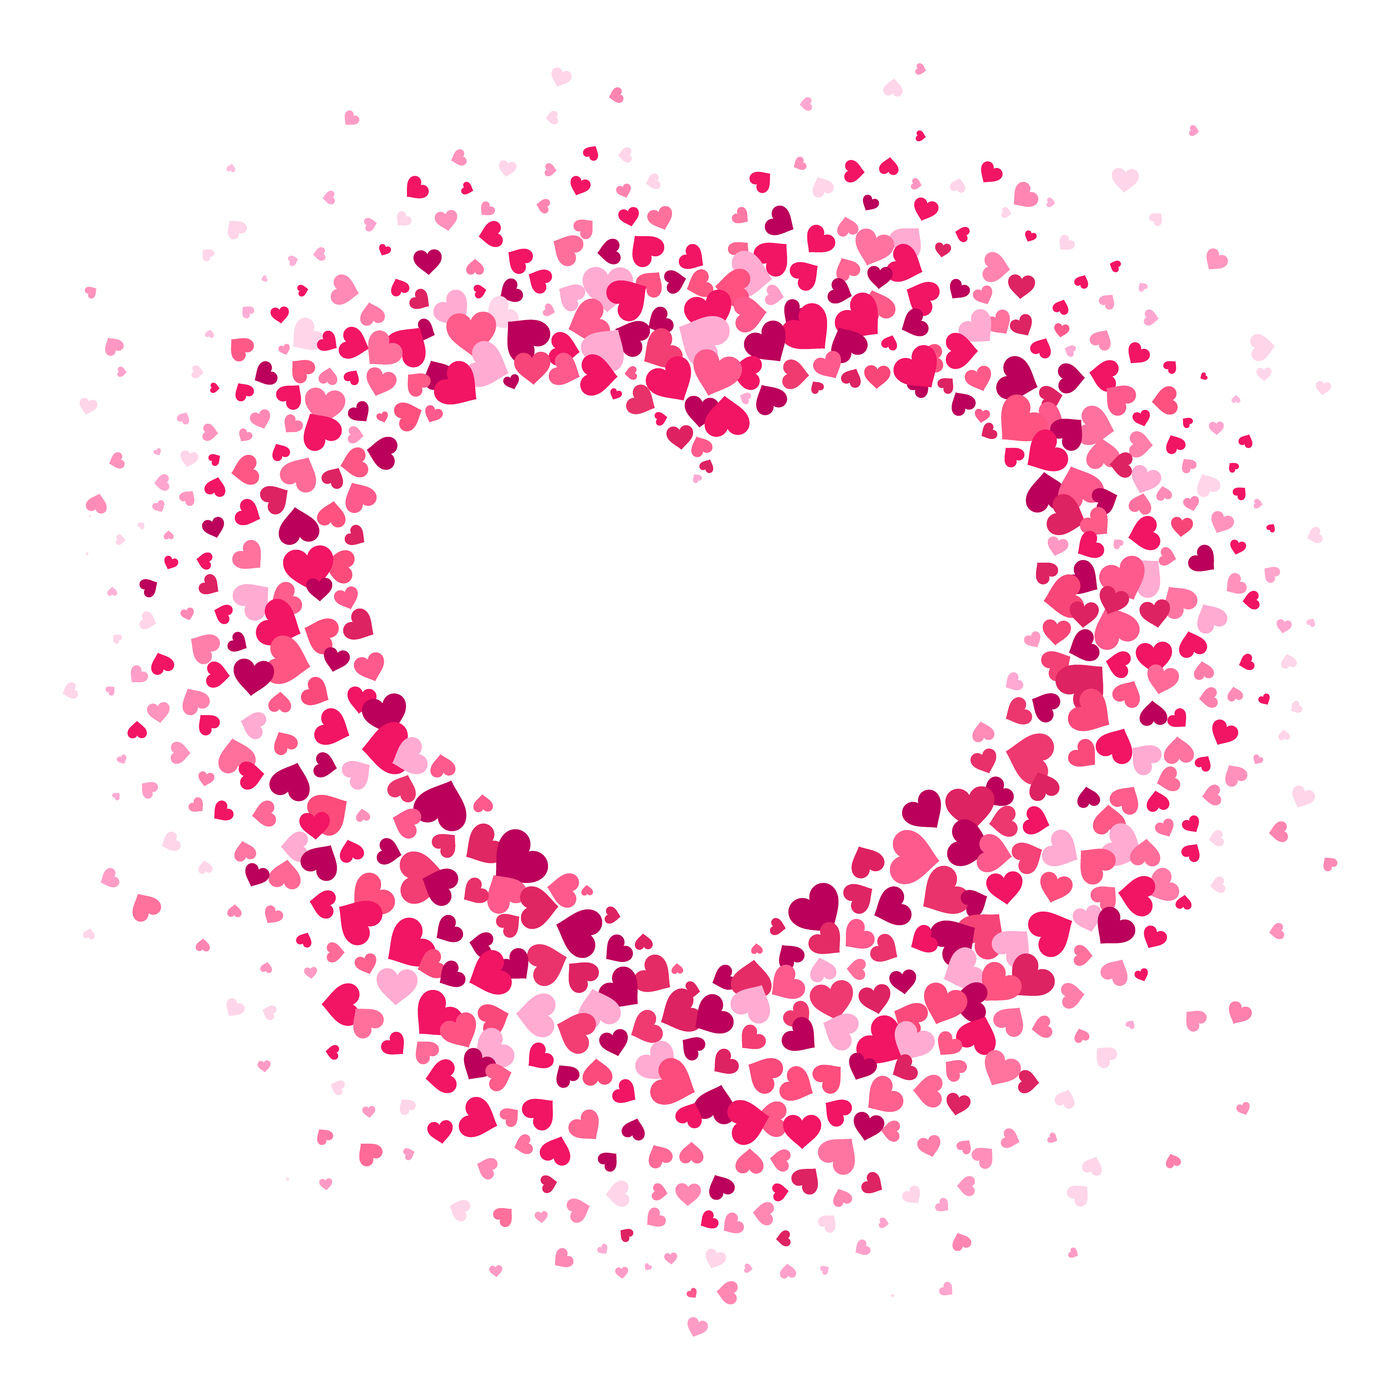 Download Love heart frame. Scattered hearts confetti in heart shape ...